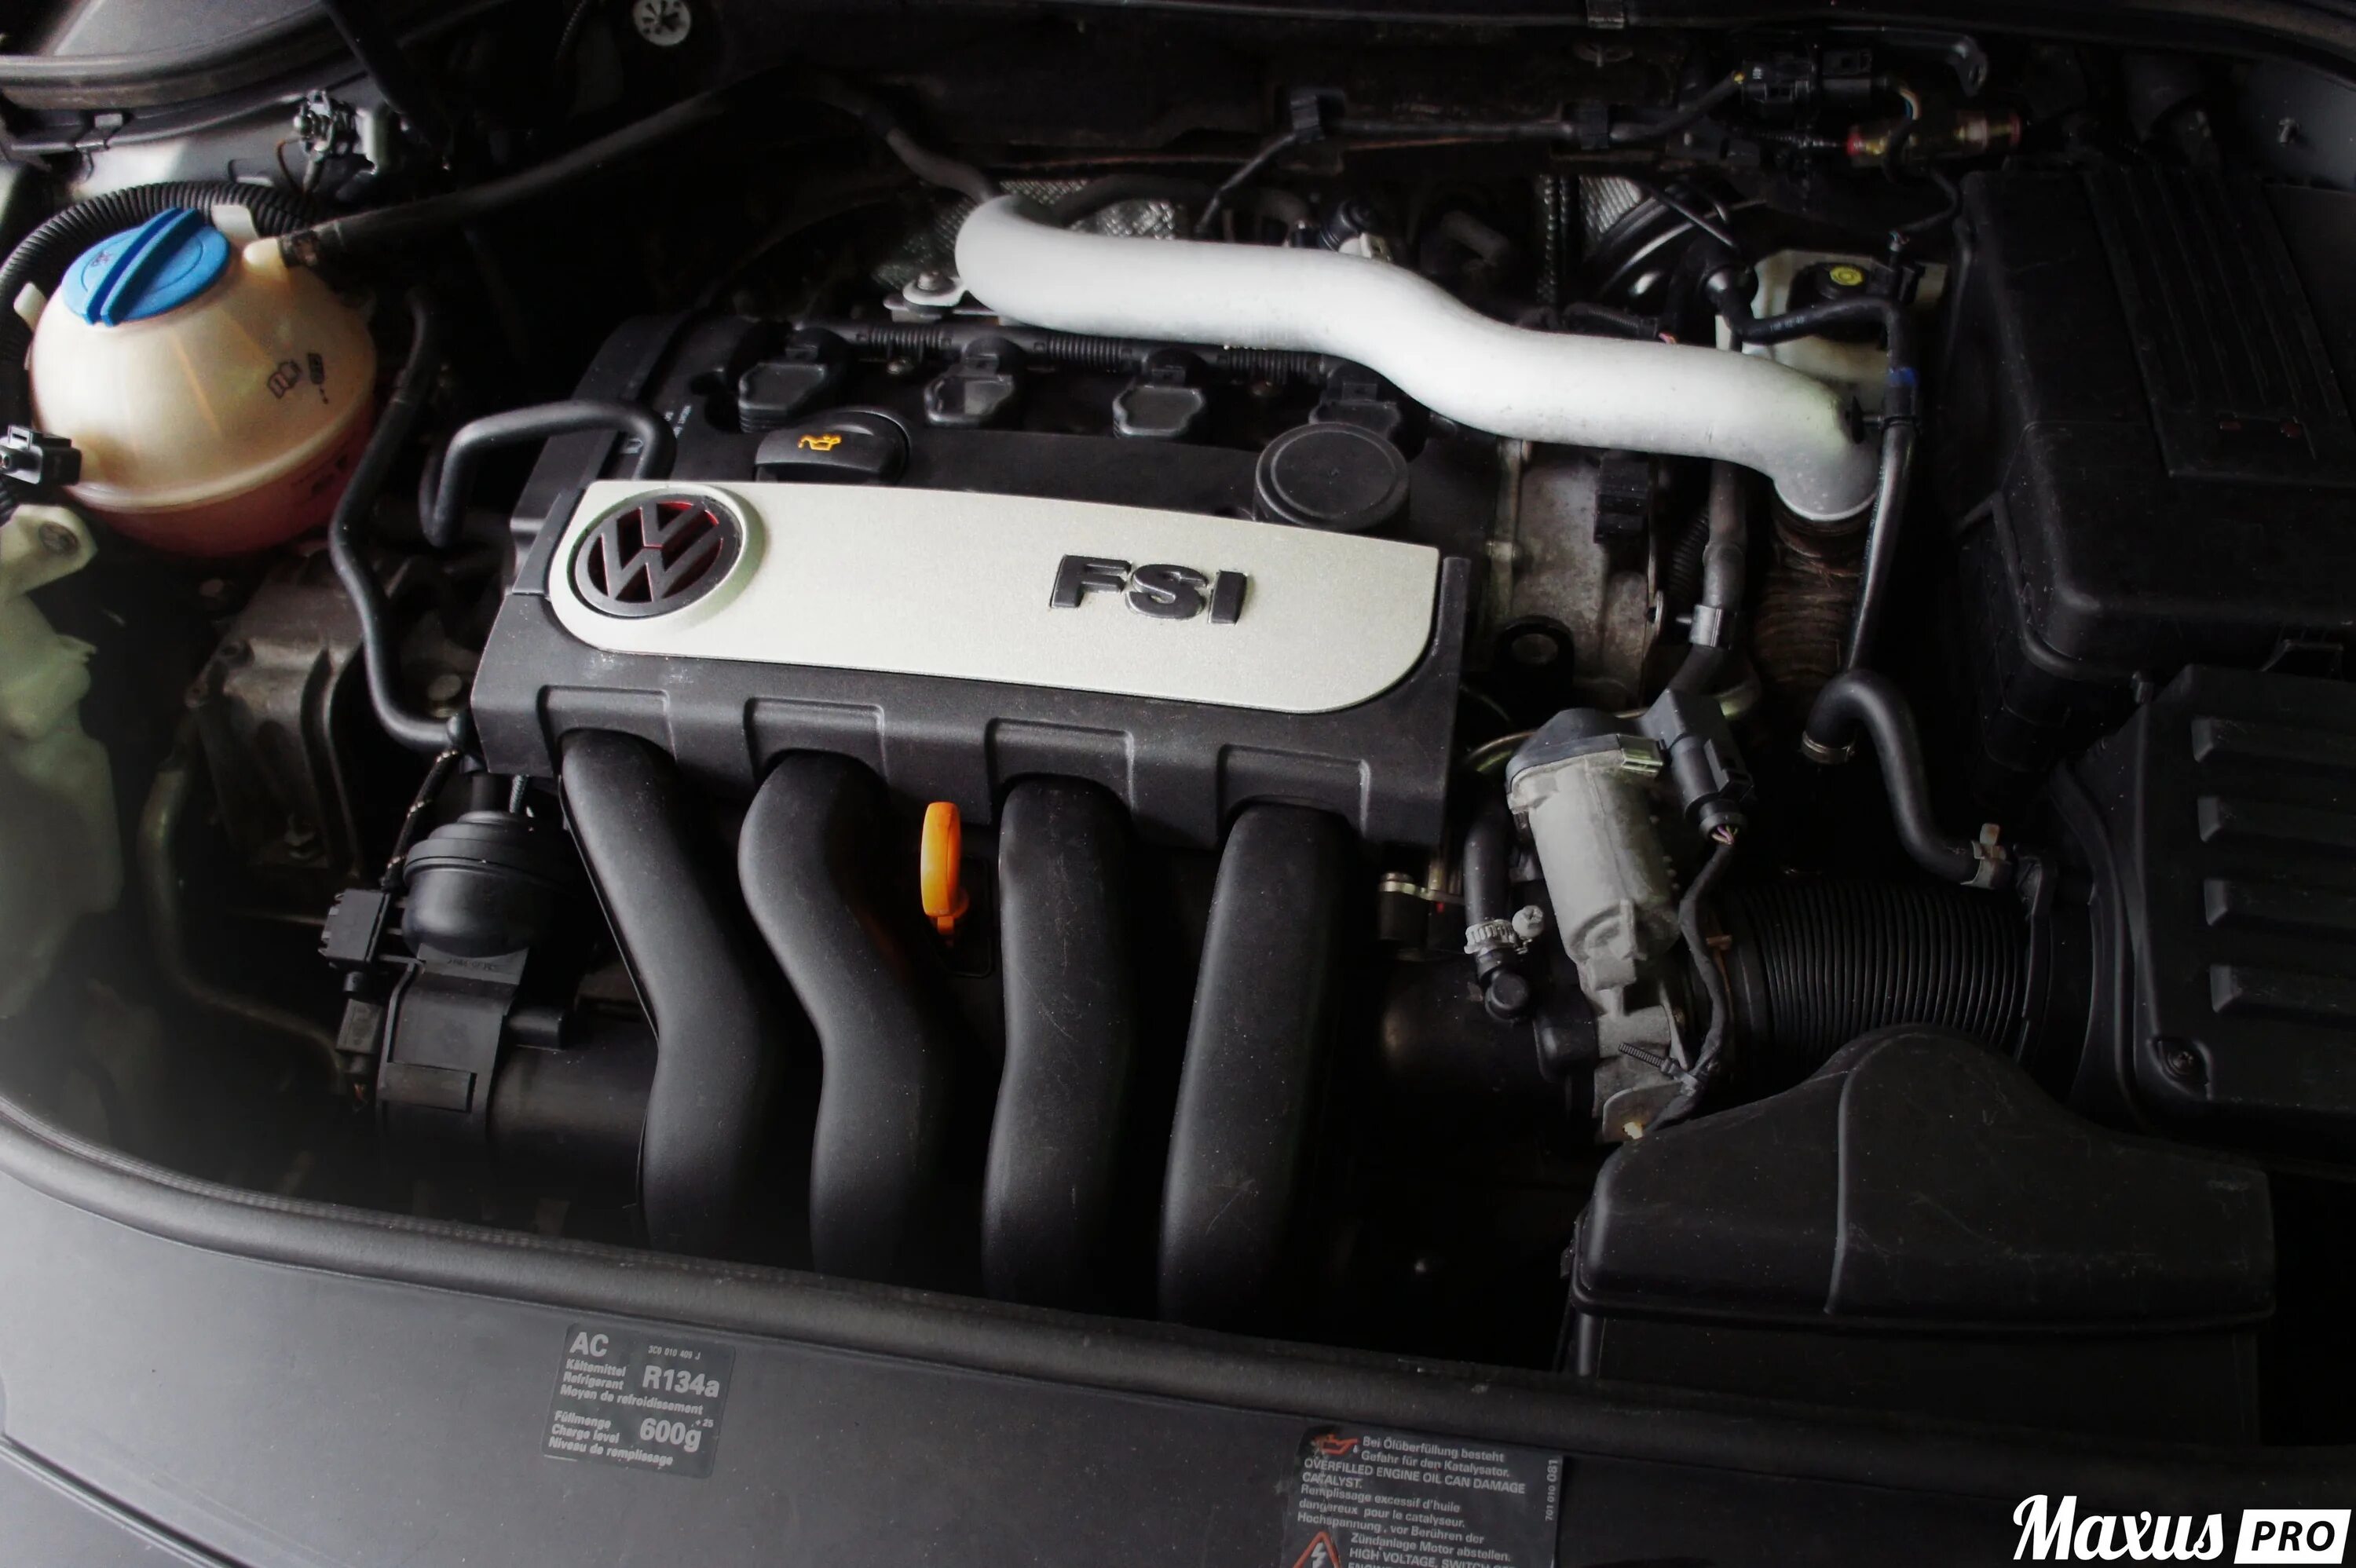 Масло пассат б6 2.0 fsi. Двигатель Фольксваген Пассат б6 2.0 FSI. Двигатель VW Passat b6 2.0FSI. Пассат б6 2.0 FSI 150 Л.С. Мотор FSI Passat b6.